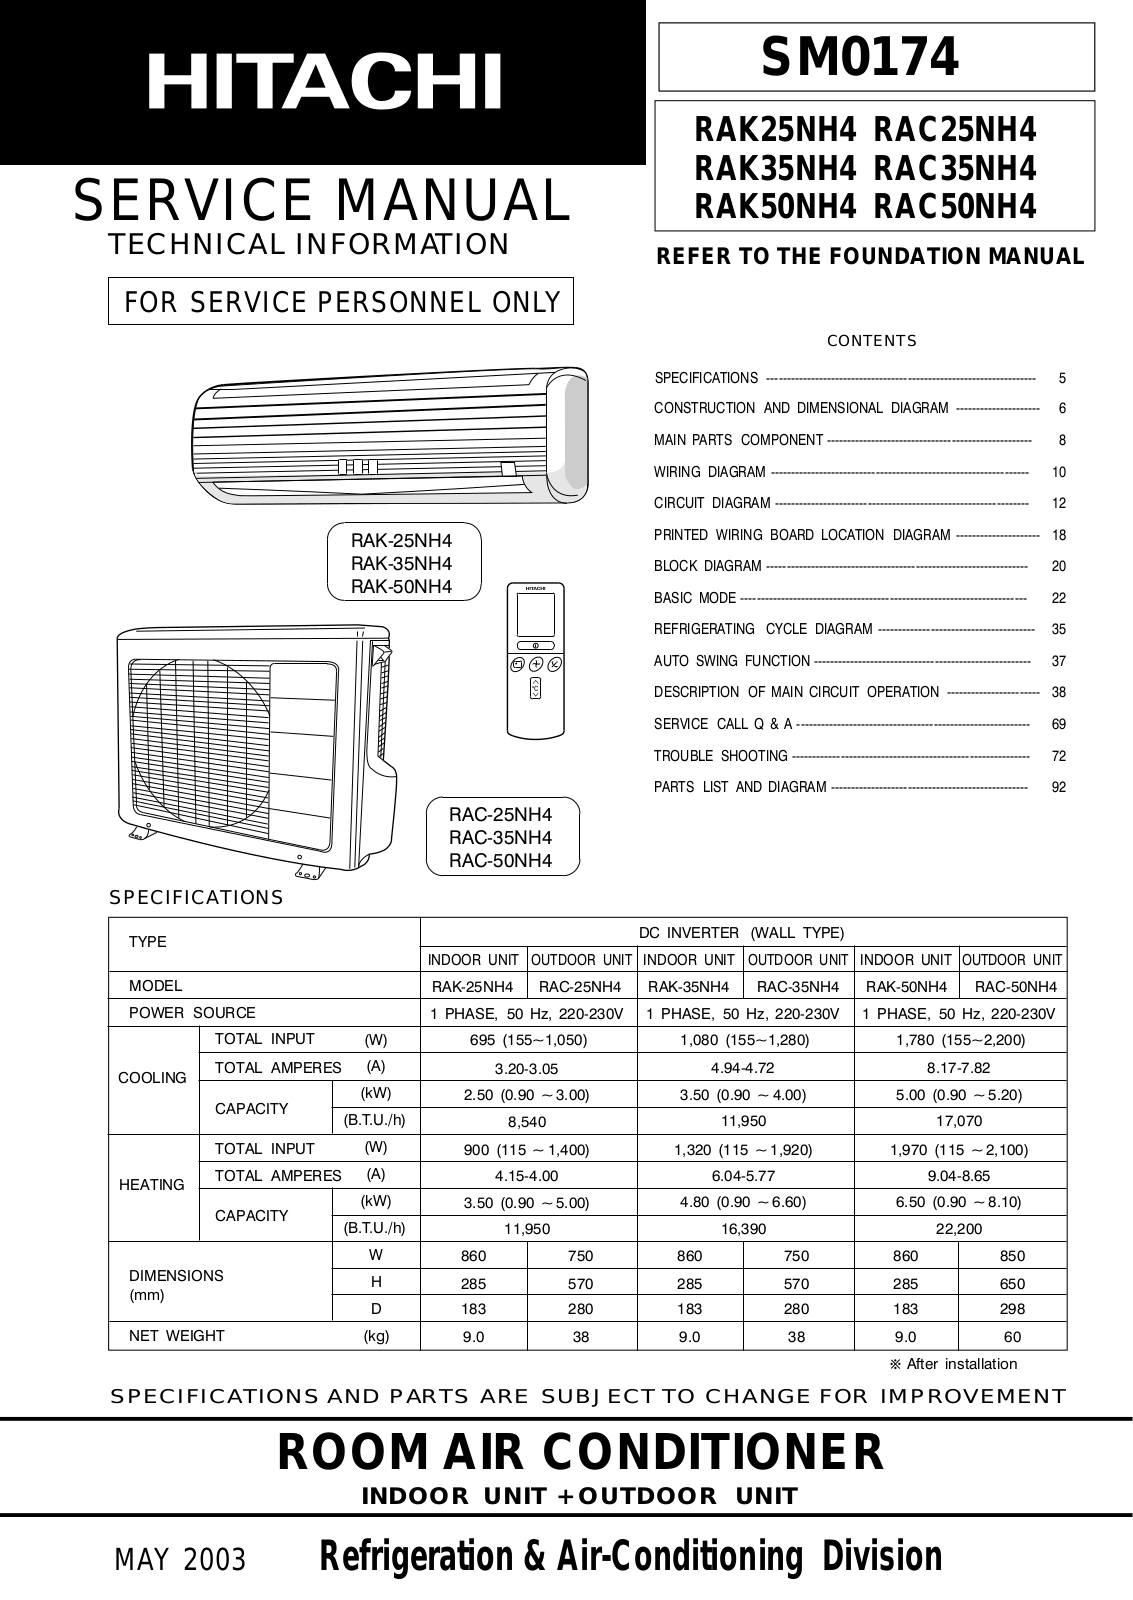 Hitachi RAK25NH4, RAK35NH4, RAK50NH4, RAC25NH4, RAC35NH4 Service manual